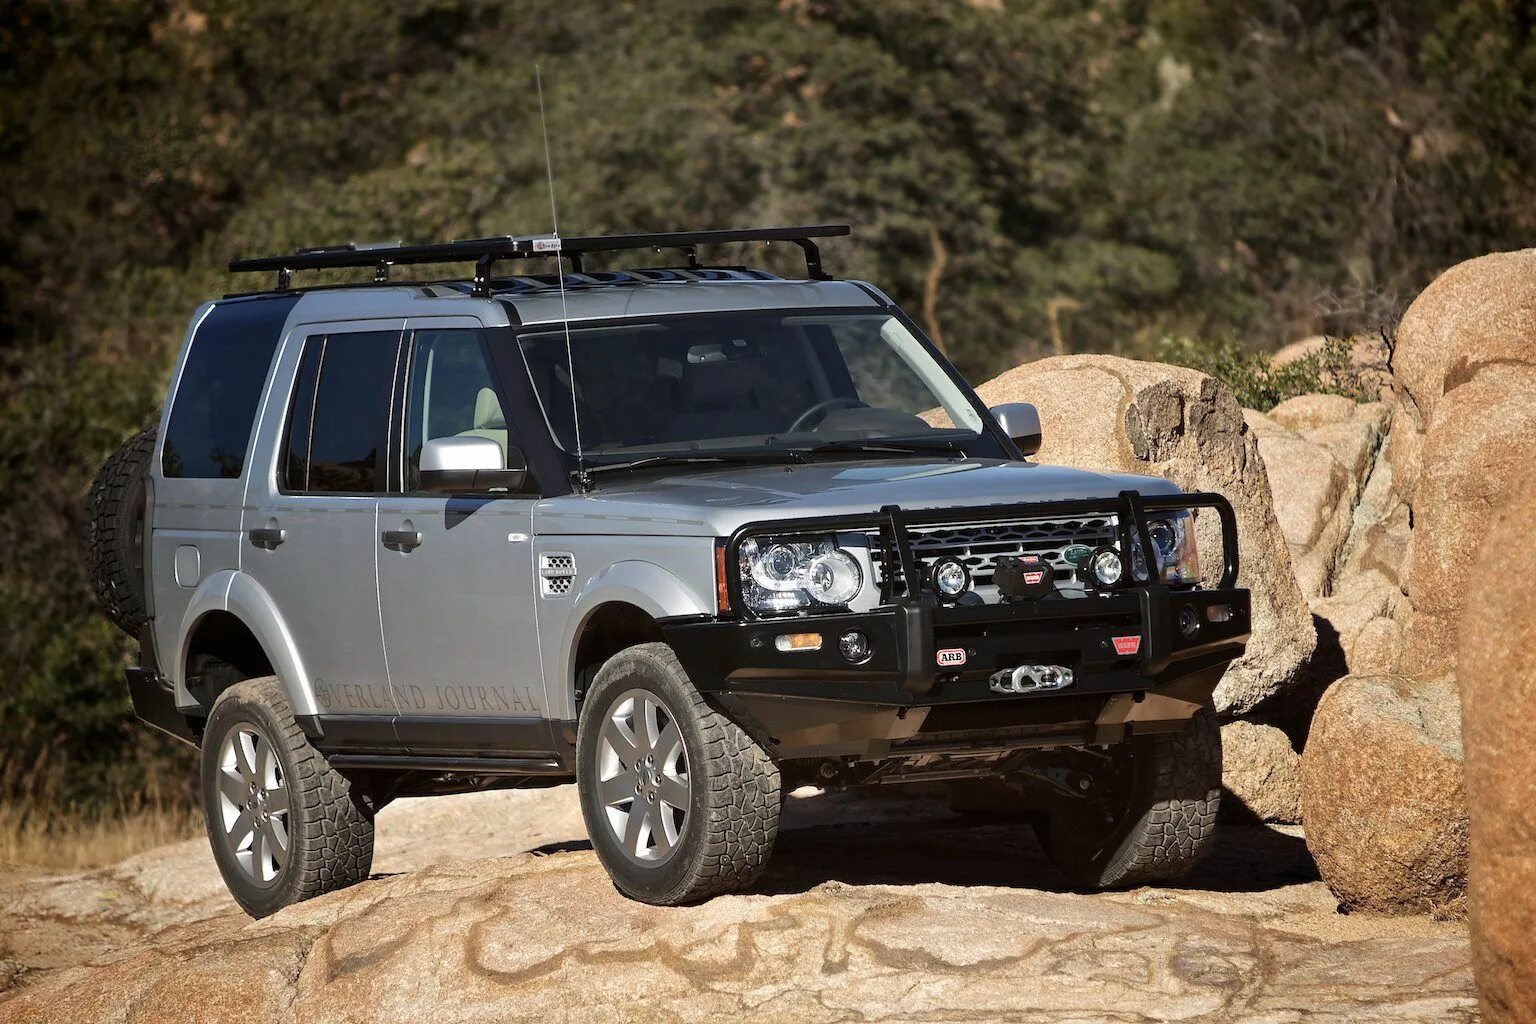 Ленд Ровер Дискавери 4. Ленд Ровер Дискавери 4 Expedition. Land Rover Discovery 3 Expedition. Land Rover lr3/Discovery 3. Дискавери форум